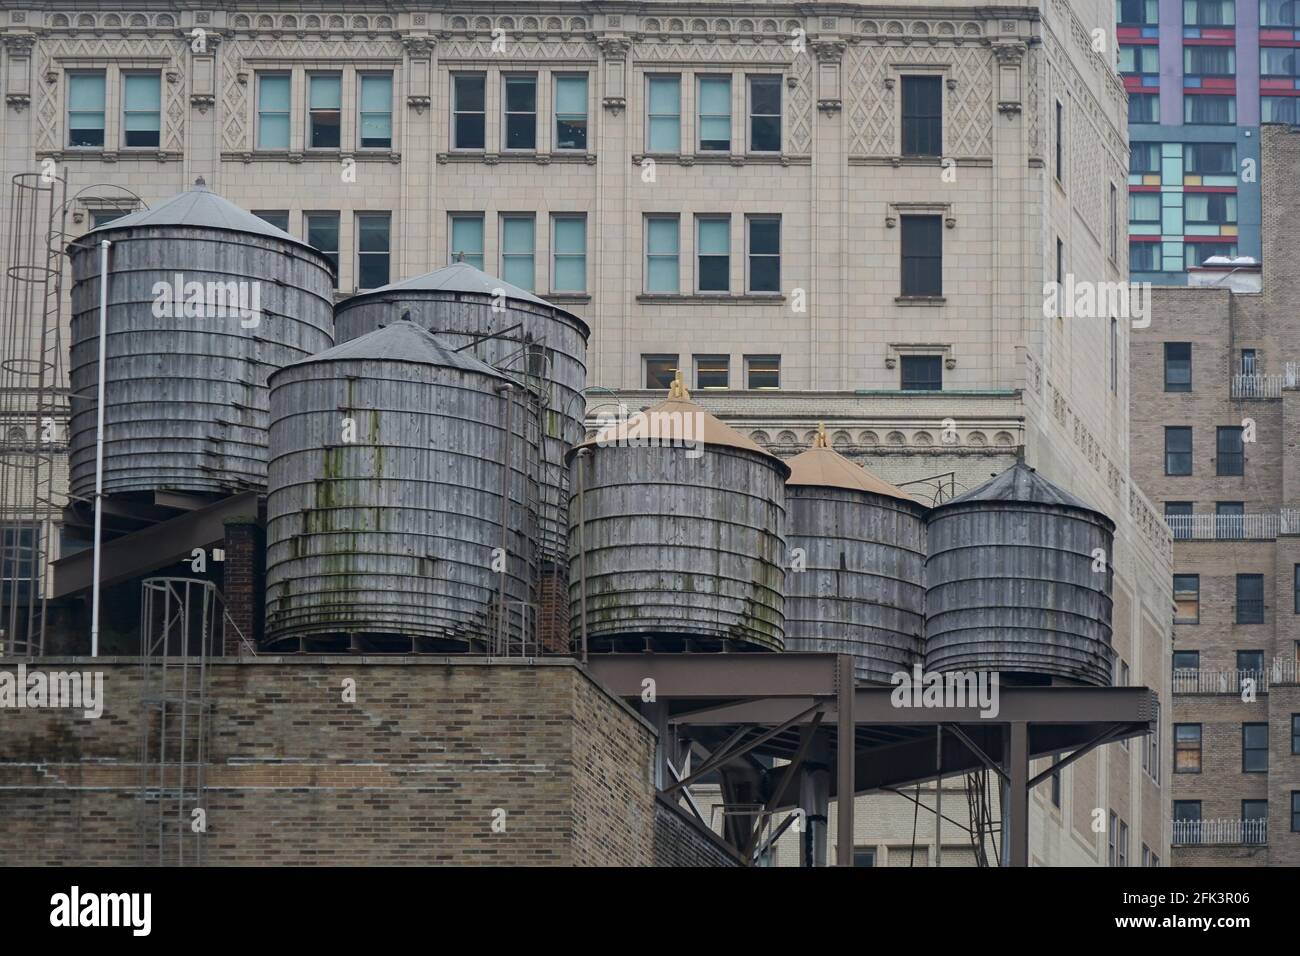 Travel USA: Iconic New York City roof water tanks Stock Photo